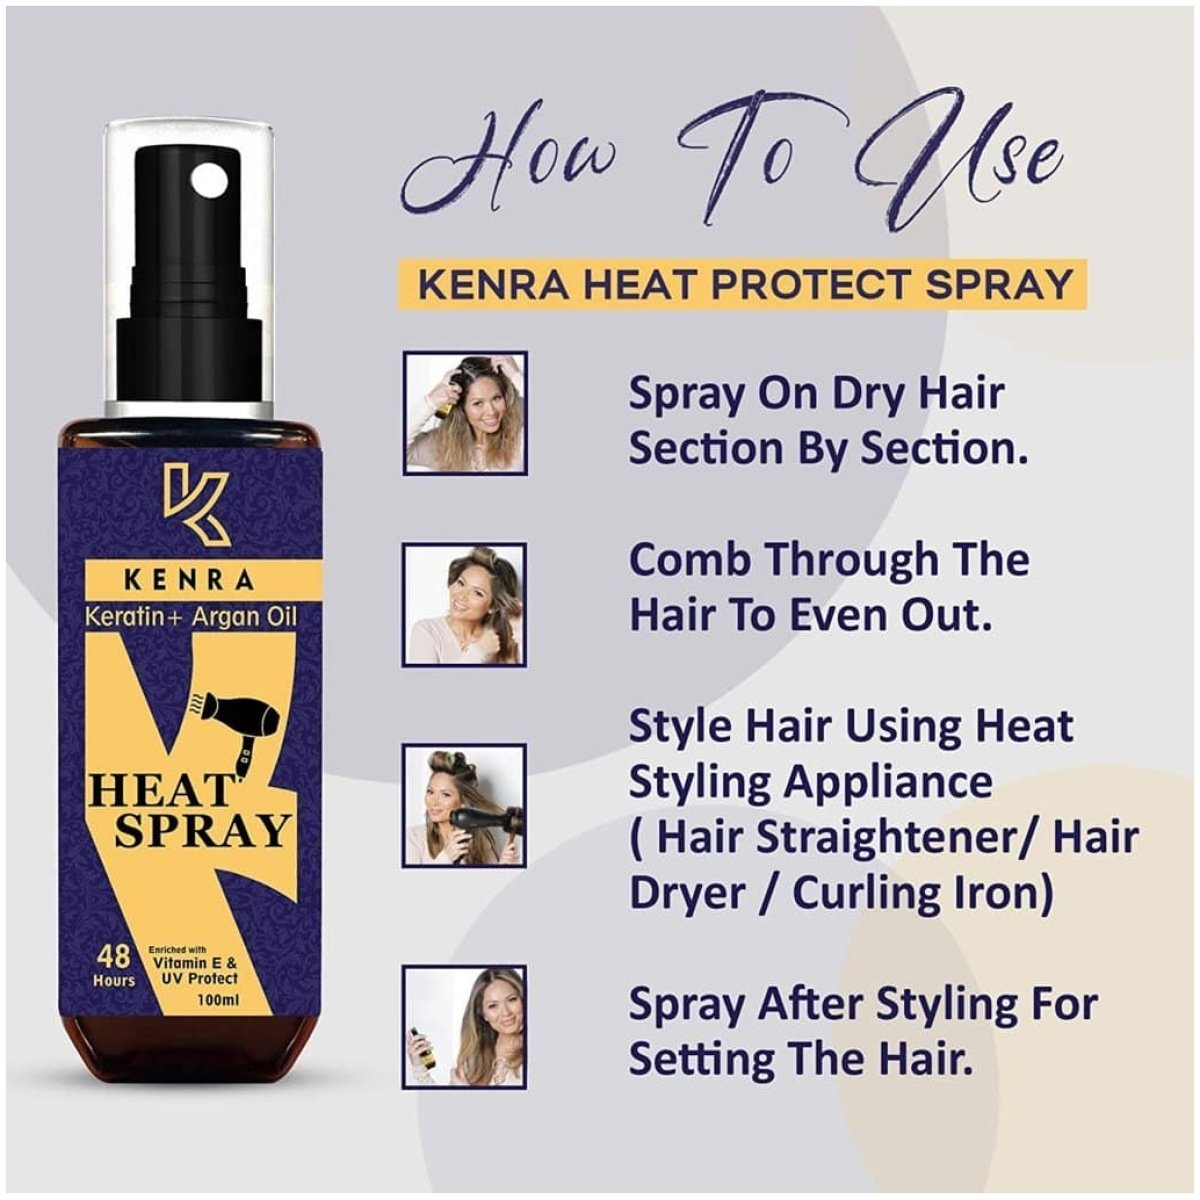 Kenra Keratin + Argan Oil Heat Spray Enriched With Vitamin E & UV Protect 100ml